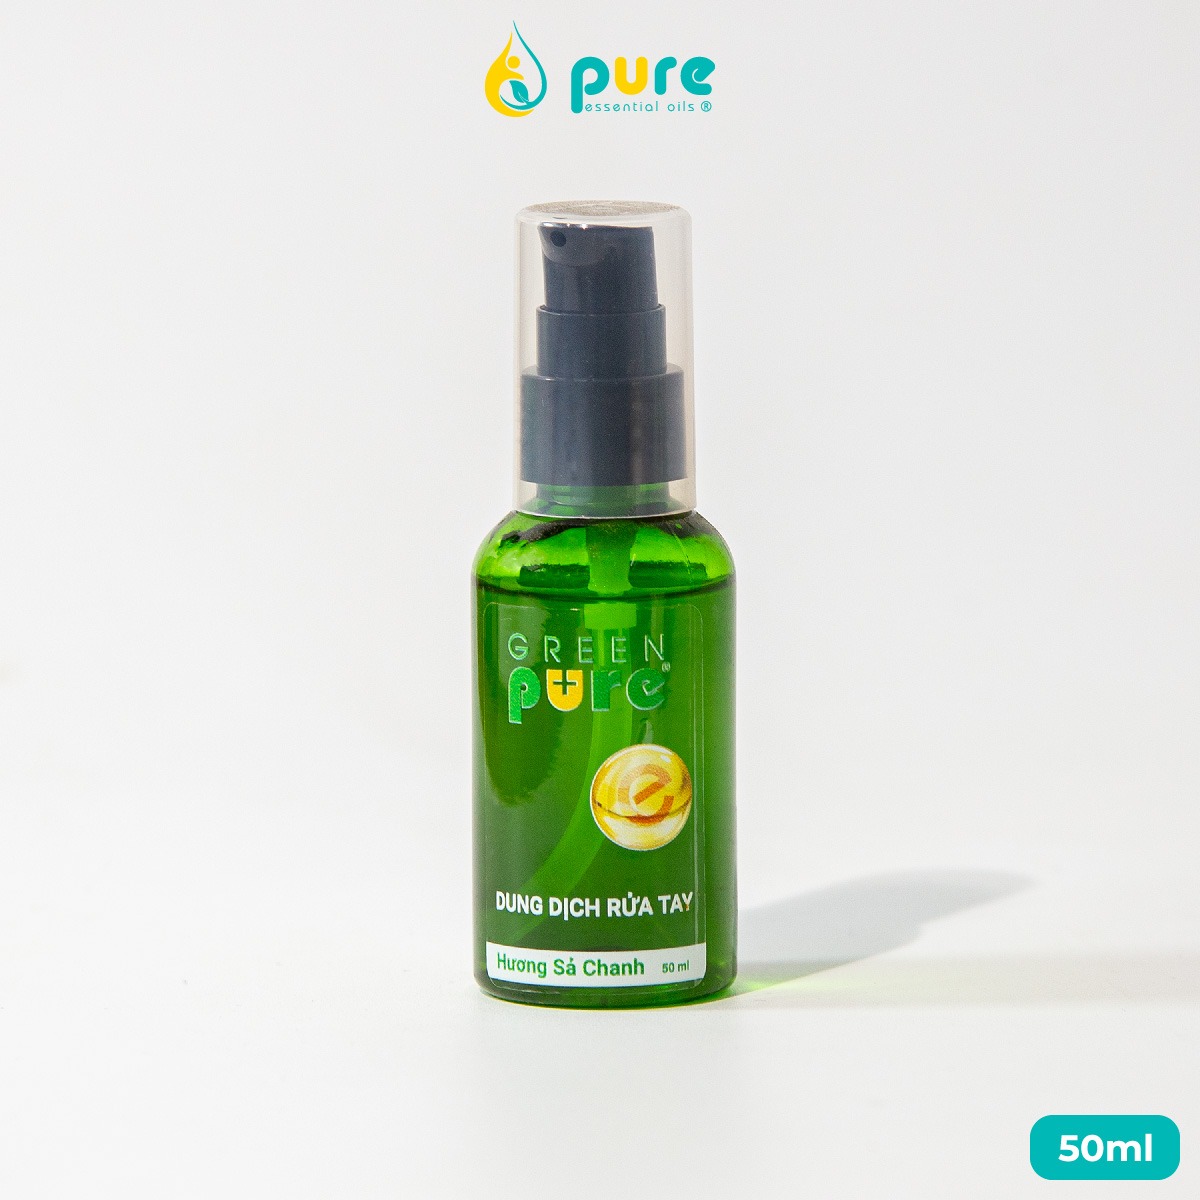 Nước Rửa Tay Green Pure chai 50ml/100ml - Dịu nhẹ, an toàn cho da giúp sạch khuẩn, khử mùi